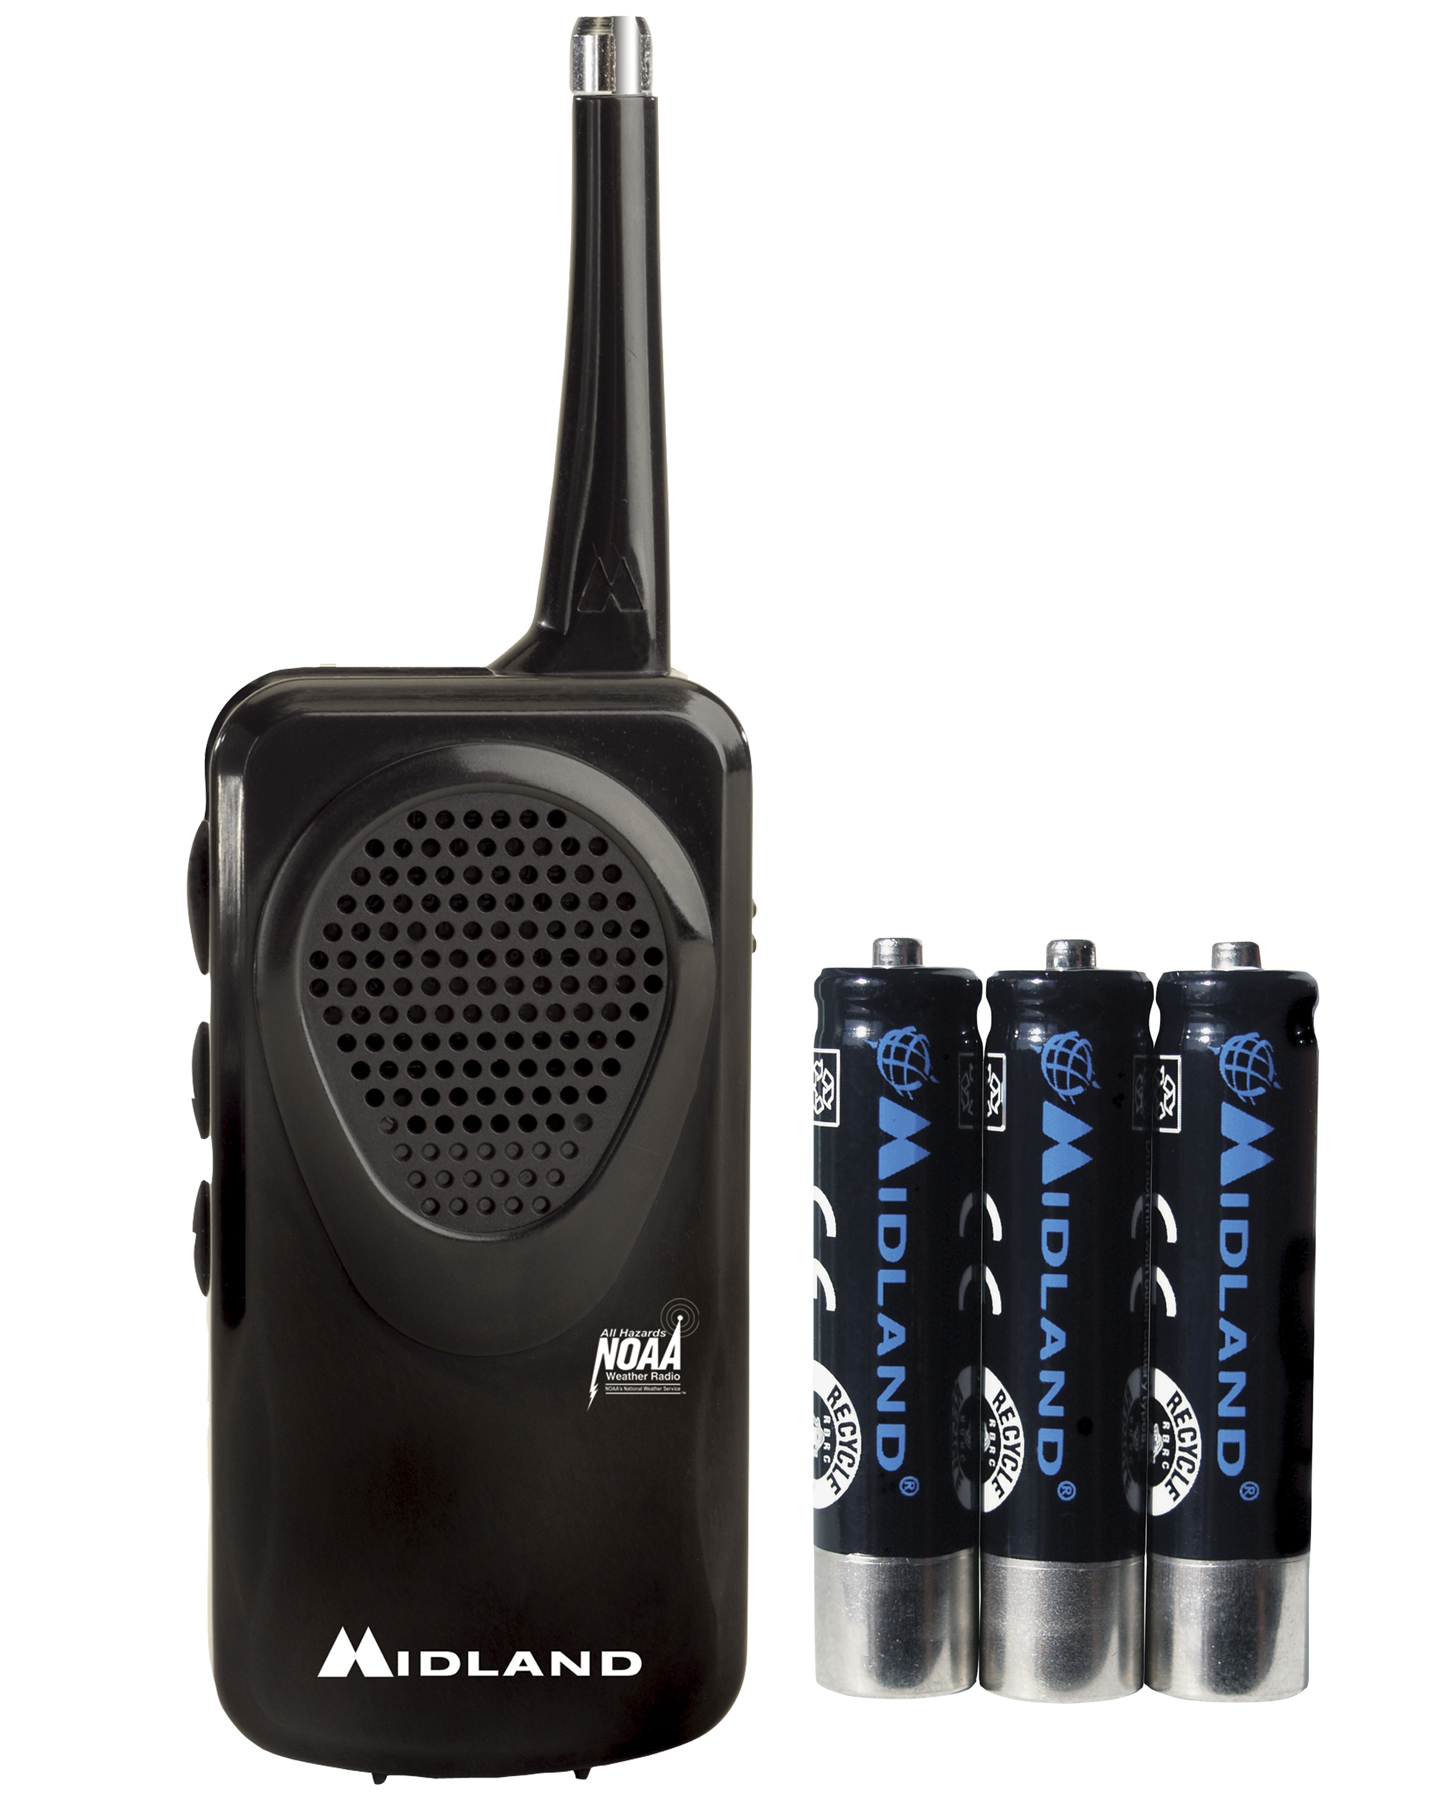 Midland HH50B Portable Pocket Size Weather Alert Radio w/AAA Batteries